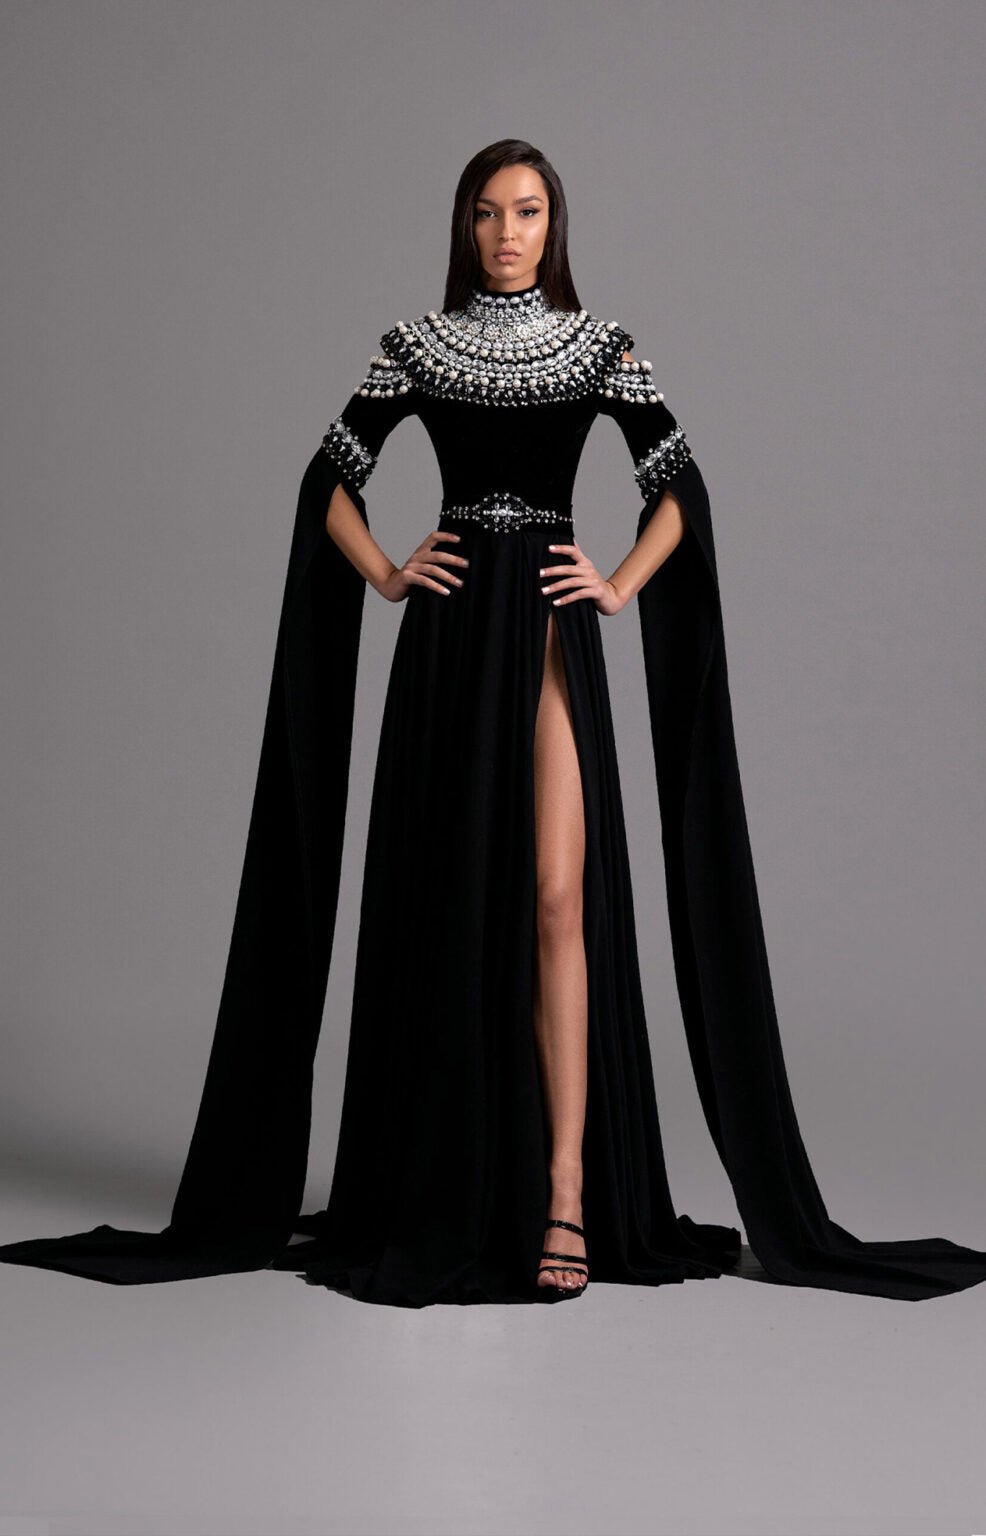 Majestic Black Gown with Dramatic Cape Sleeves - KUJTA & MERI - KUJTA & MERI